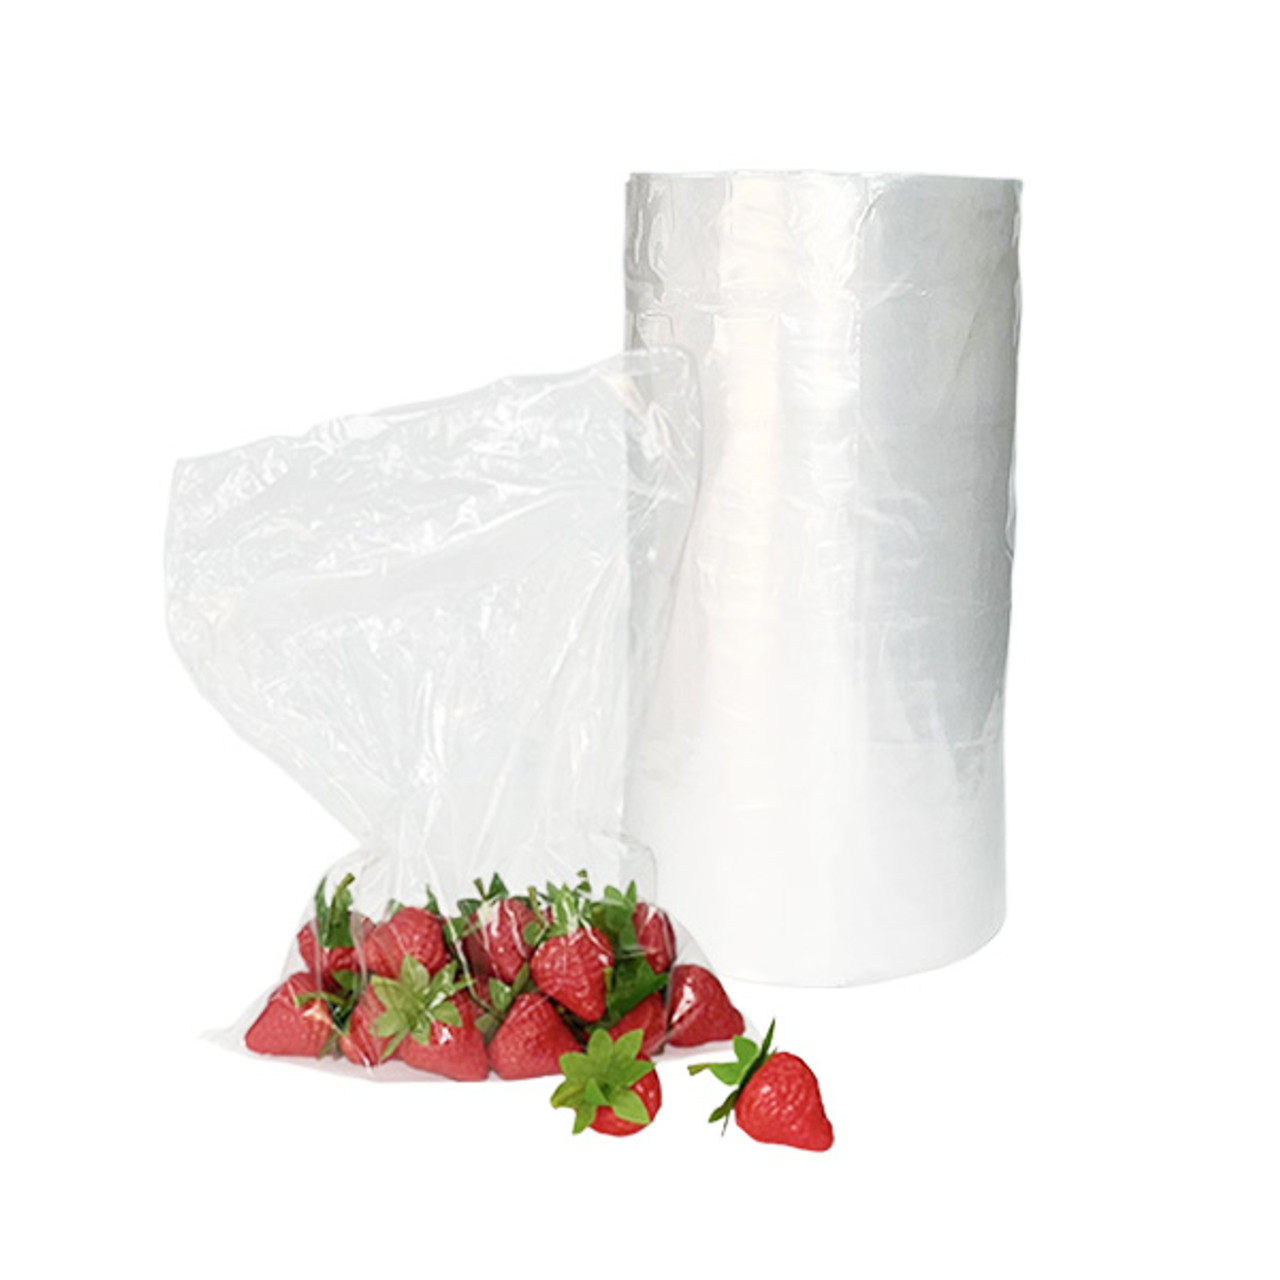 12" x 20" LD Clear Produce Bags On a Roll 30 Micron (390 Bags/rl)